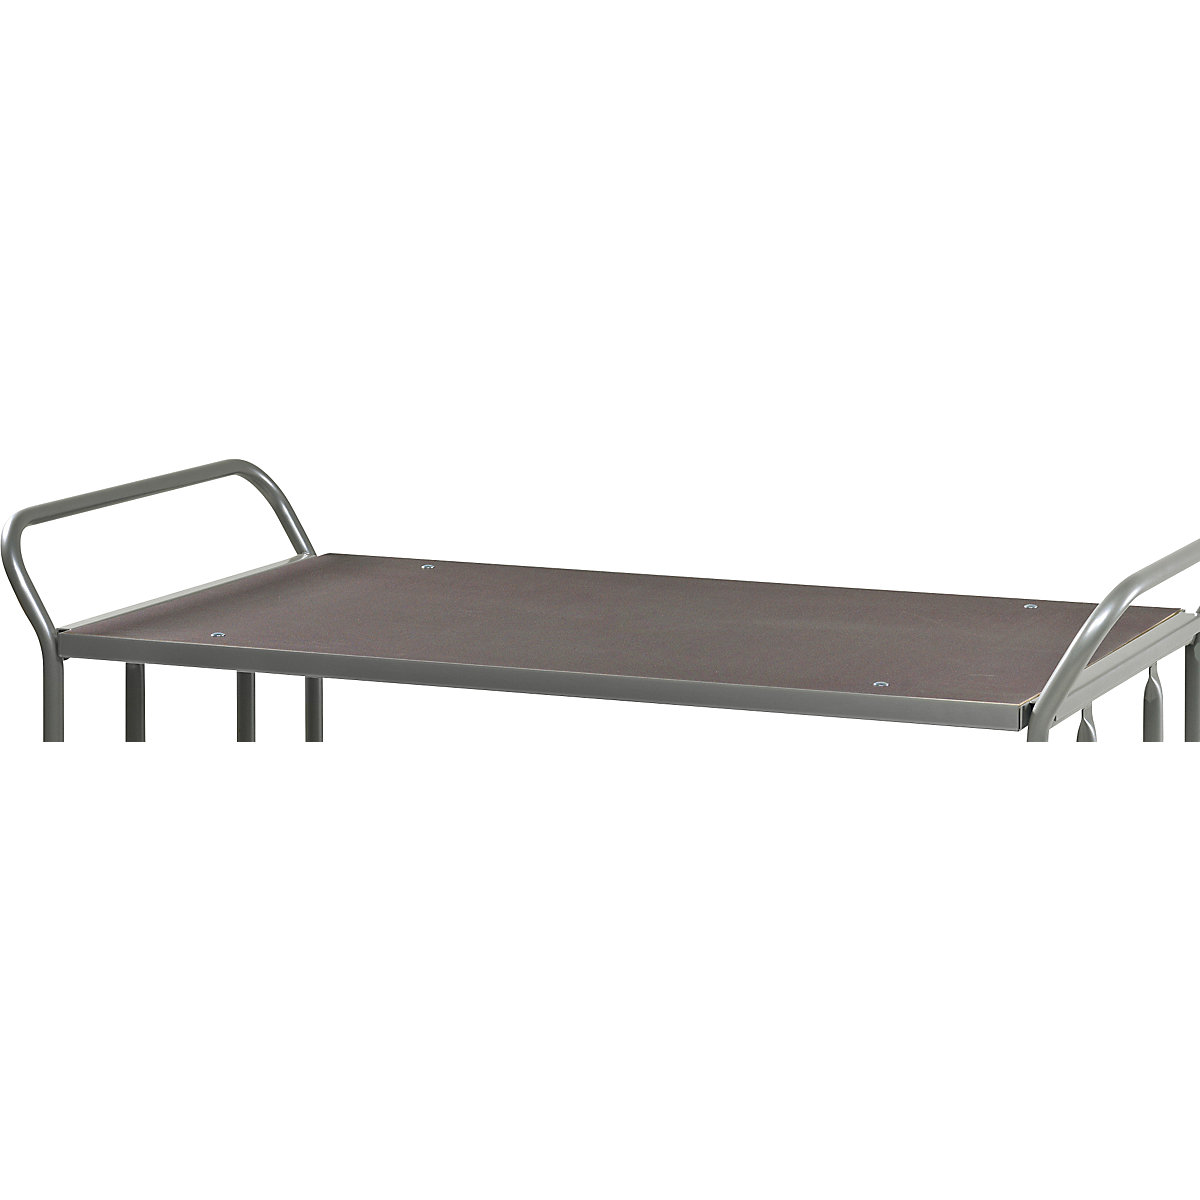 Series 700 tabletop – Kongamek